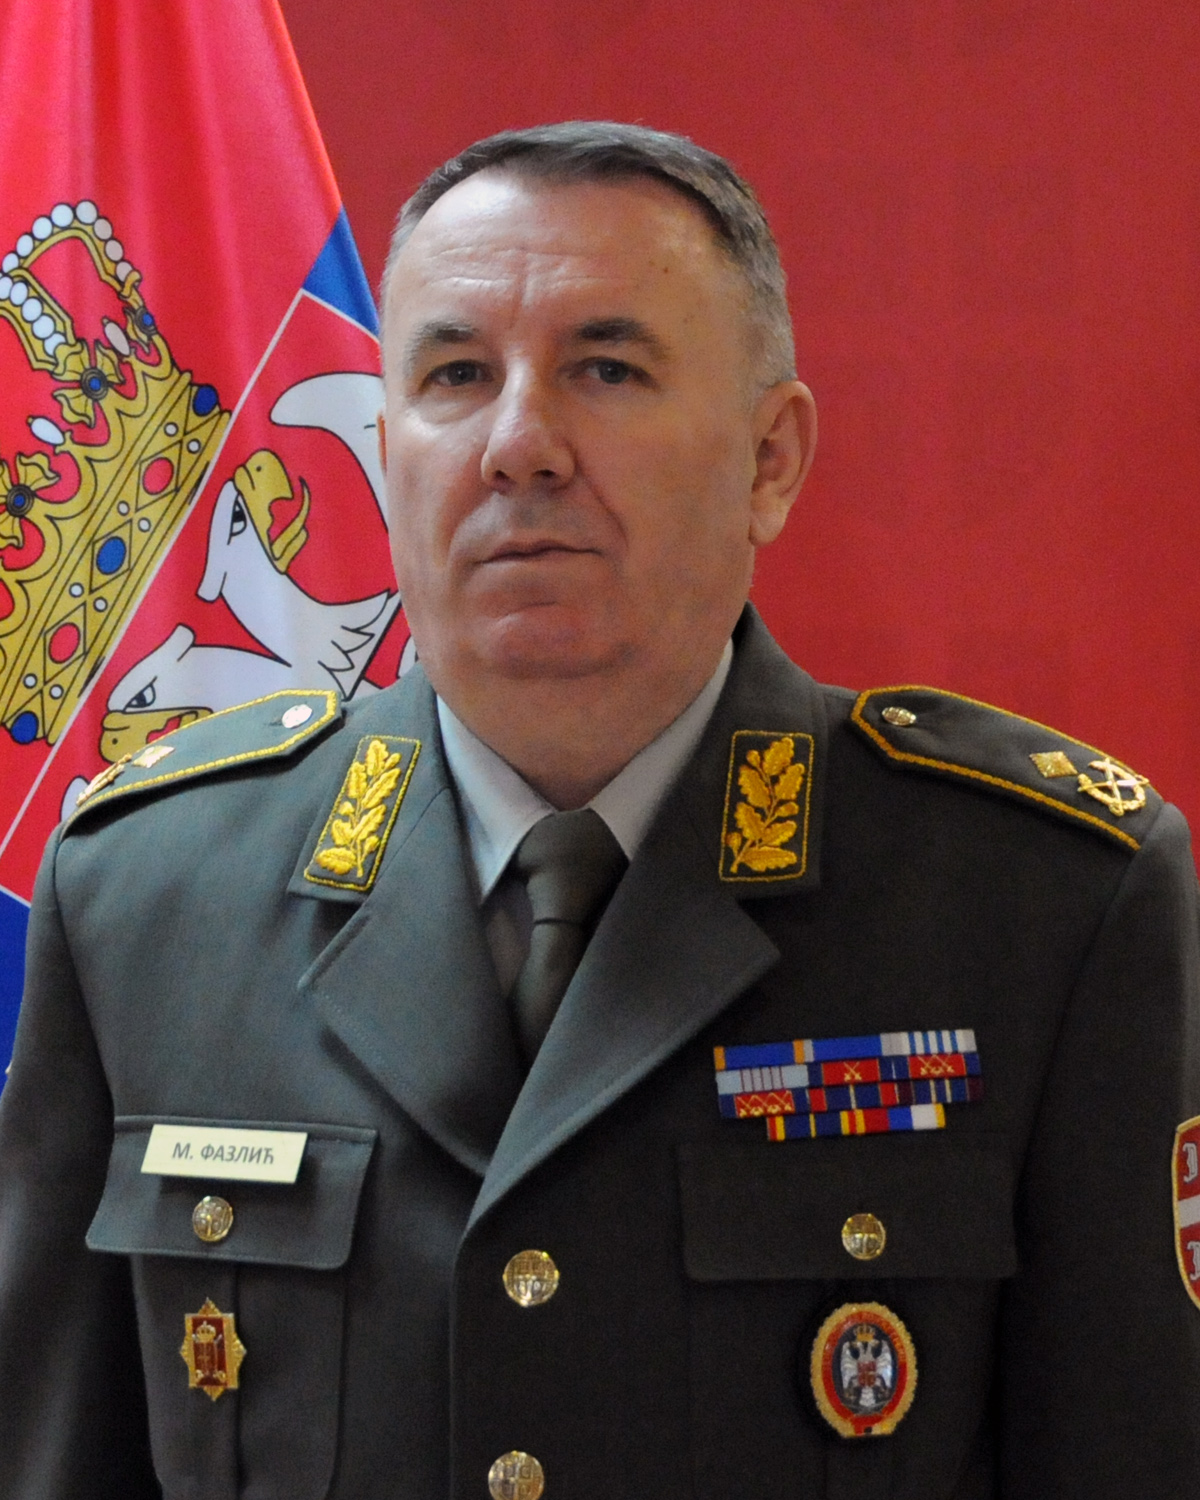 brigadni general Muharem Fazlić